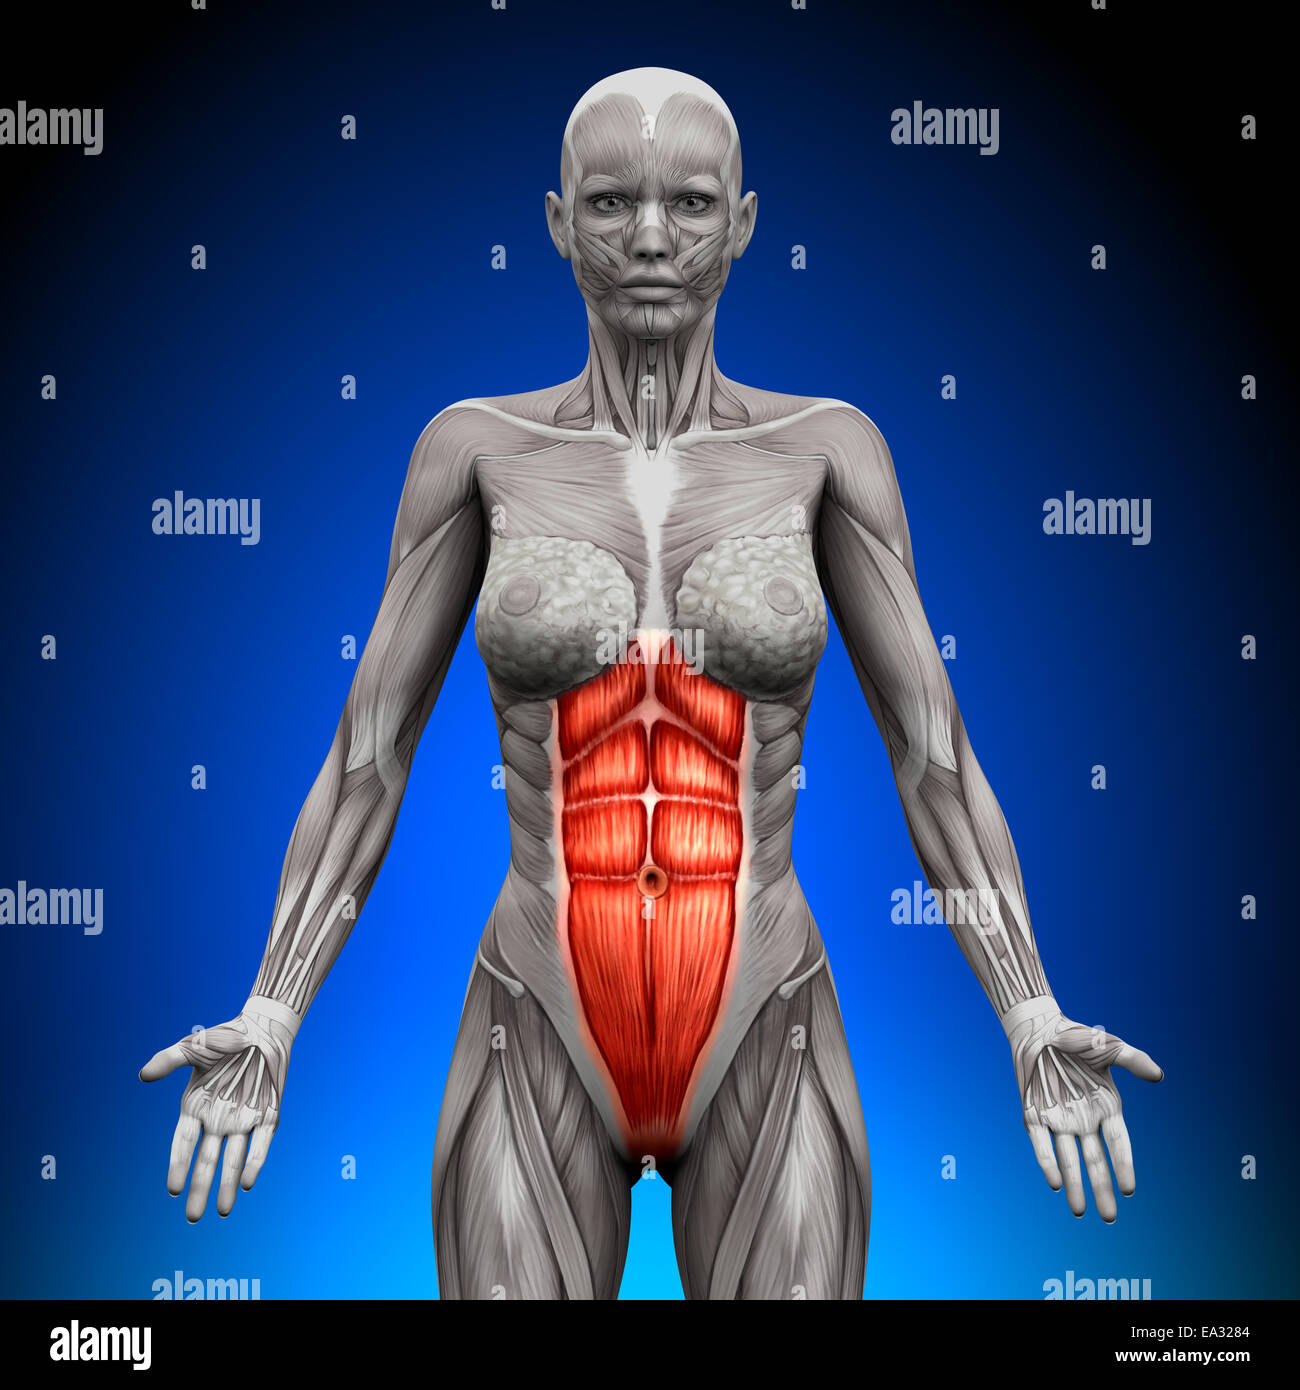 Abdominal Muscles Diagram Stock Photos & Abdominal Muscles ...